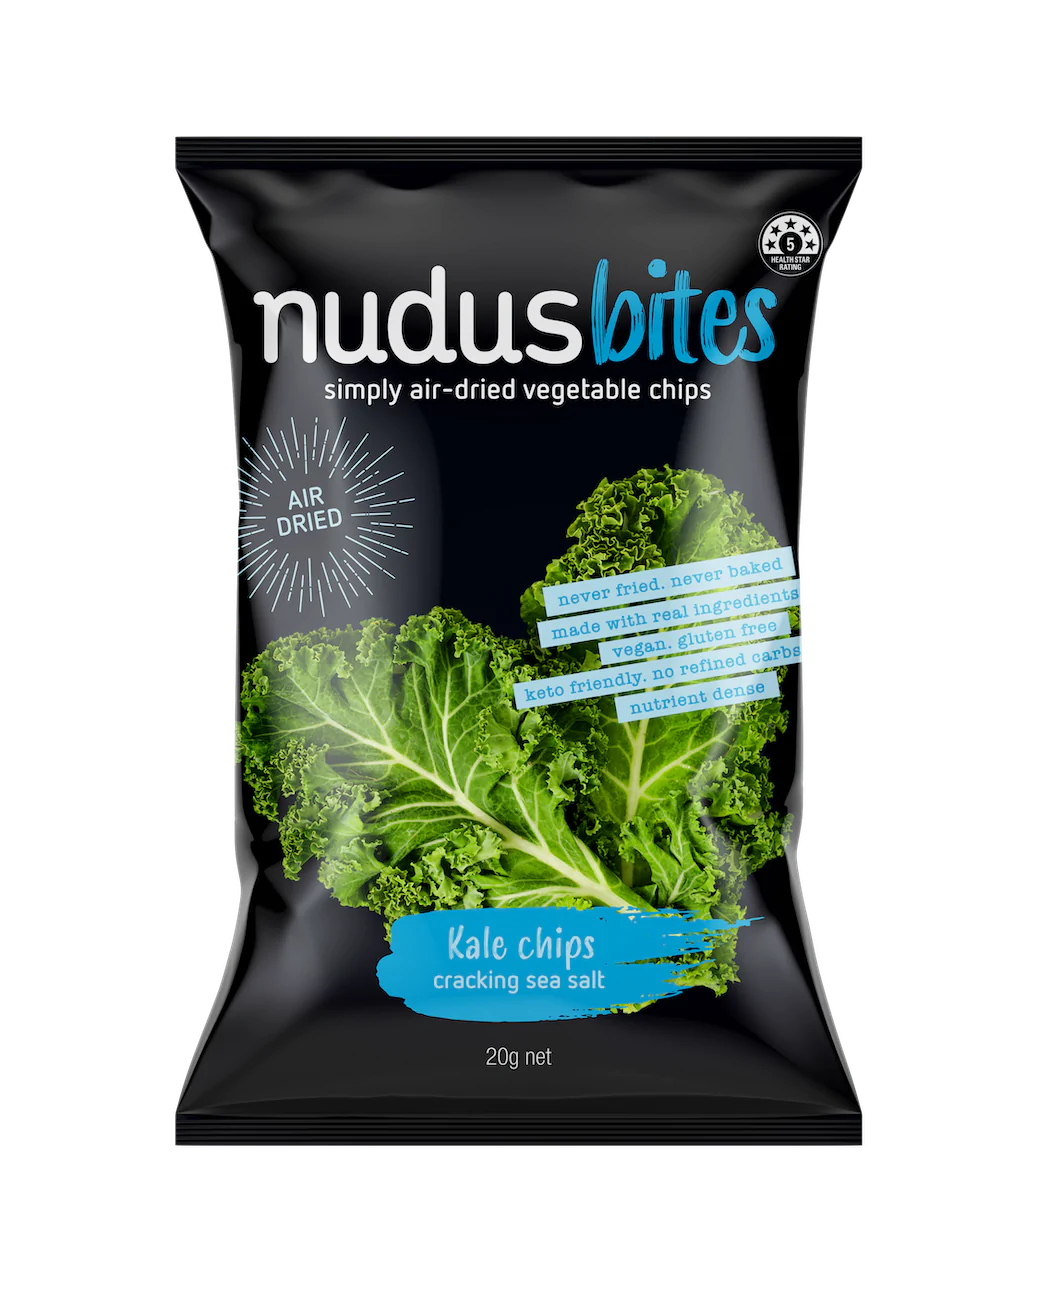 Nudus Bites Vegetable Air Dried Kale Chips 20g, Cracking Sea Salt Flavour